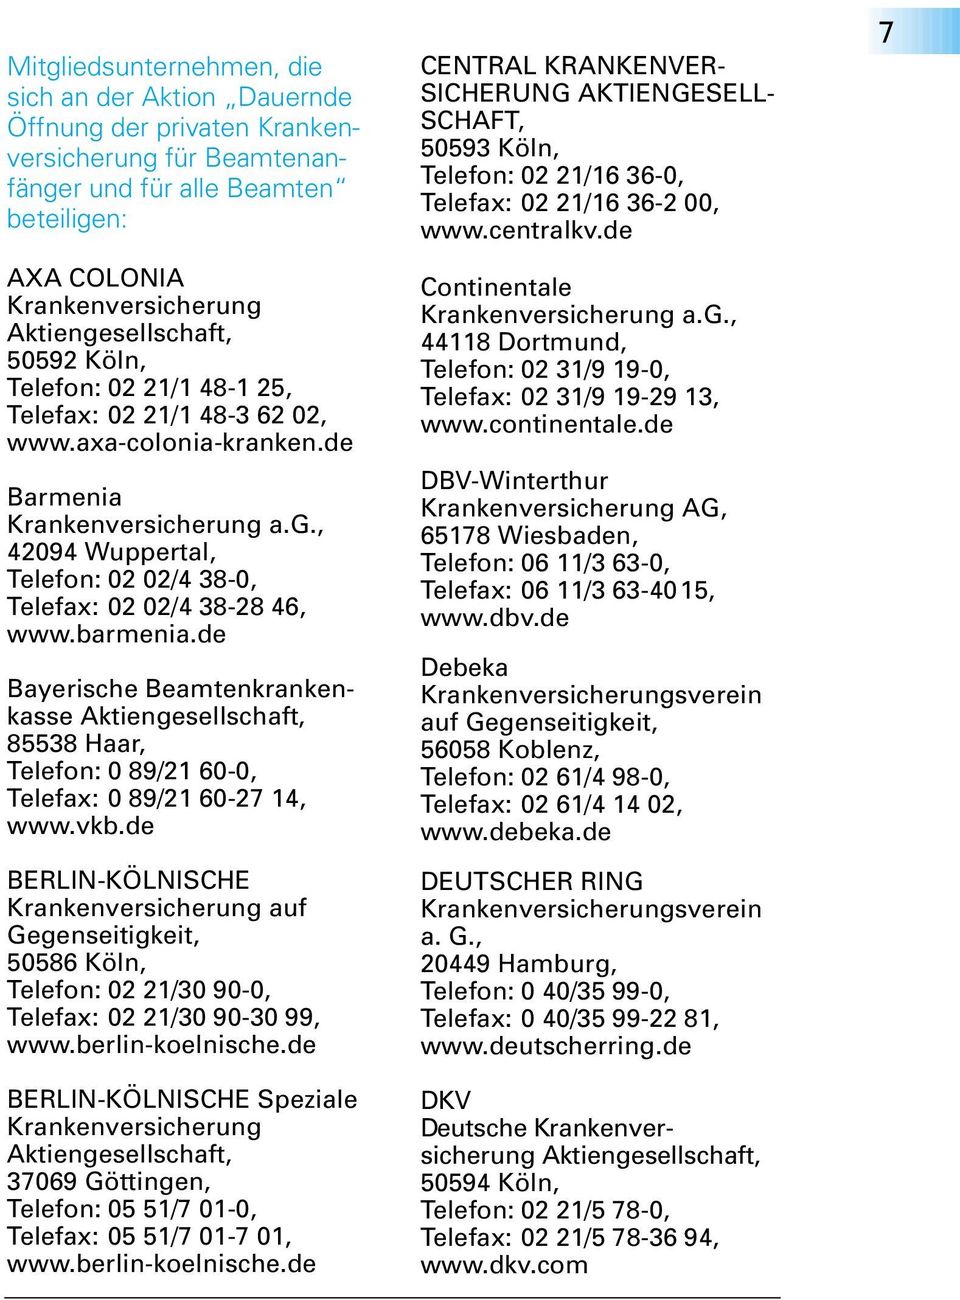 de Bayerische Beamtenkrankenkasse Aktiengesellschaft, 85538 Haar, Telefon: 0 89/21 60-0, Telefax: 0 89/21 60-27 14, www.vkb.